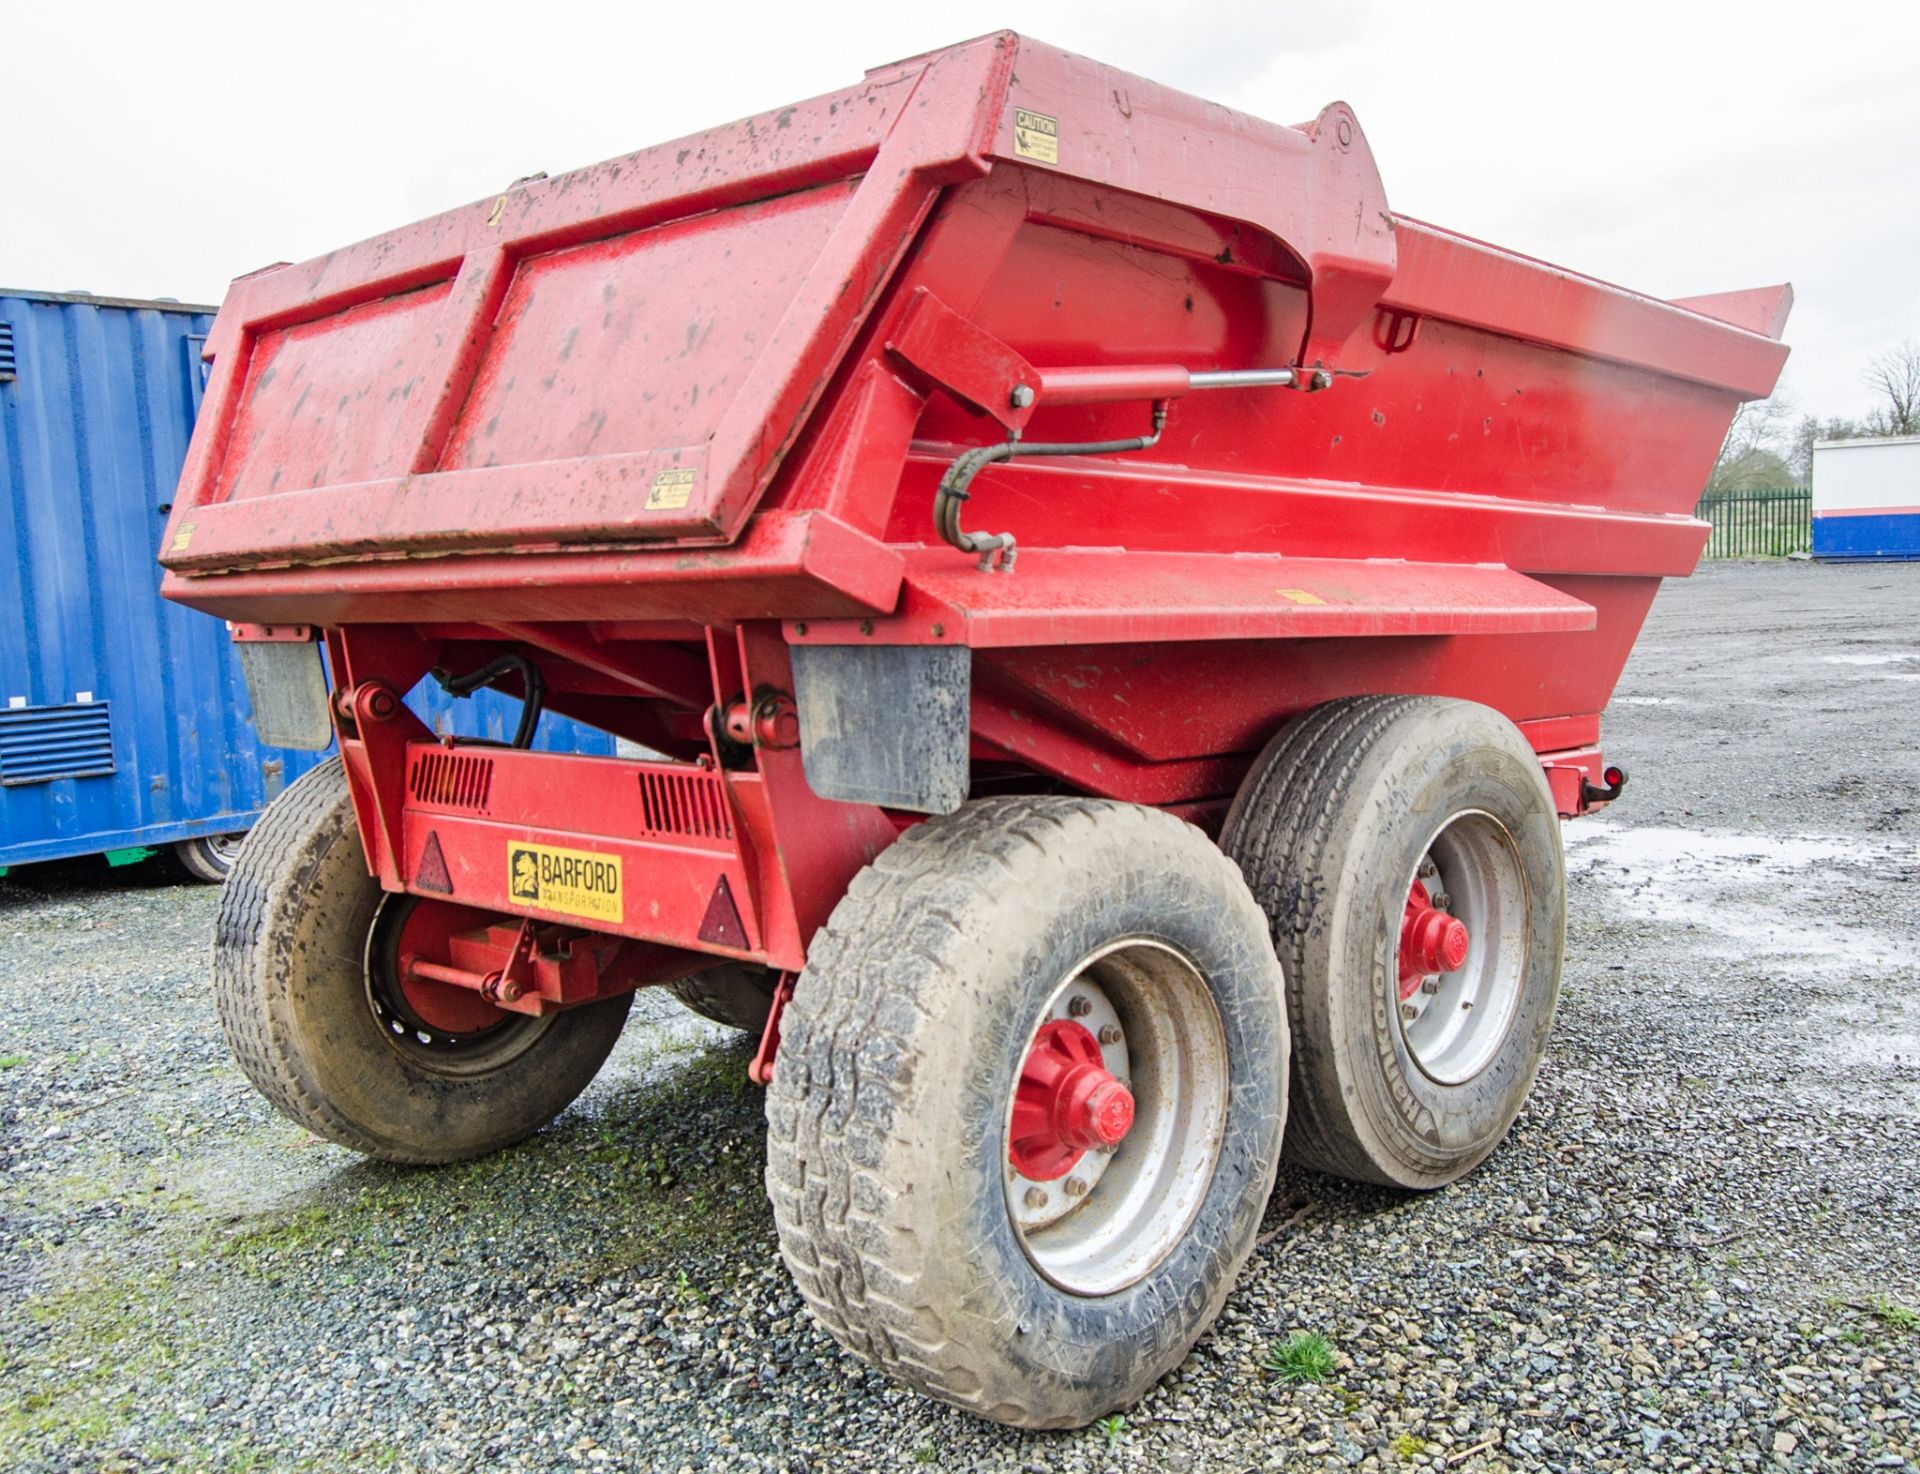 Barford D15 15 tonne dump trailer Year: 2021 S/N: 400125 - Image 3 of 9